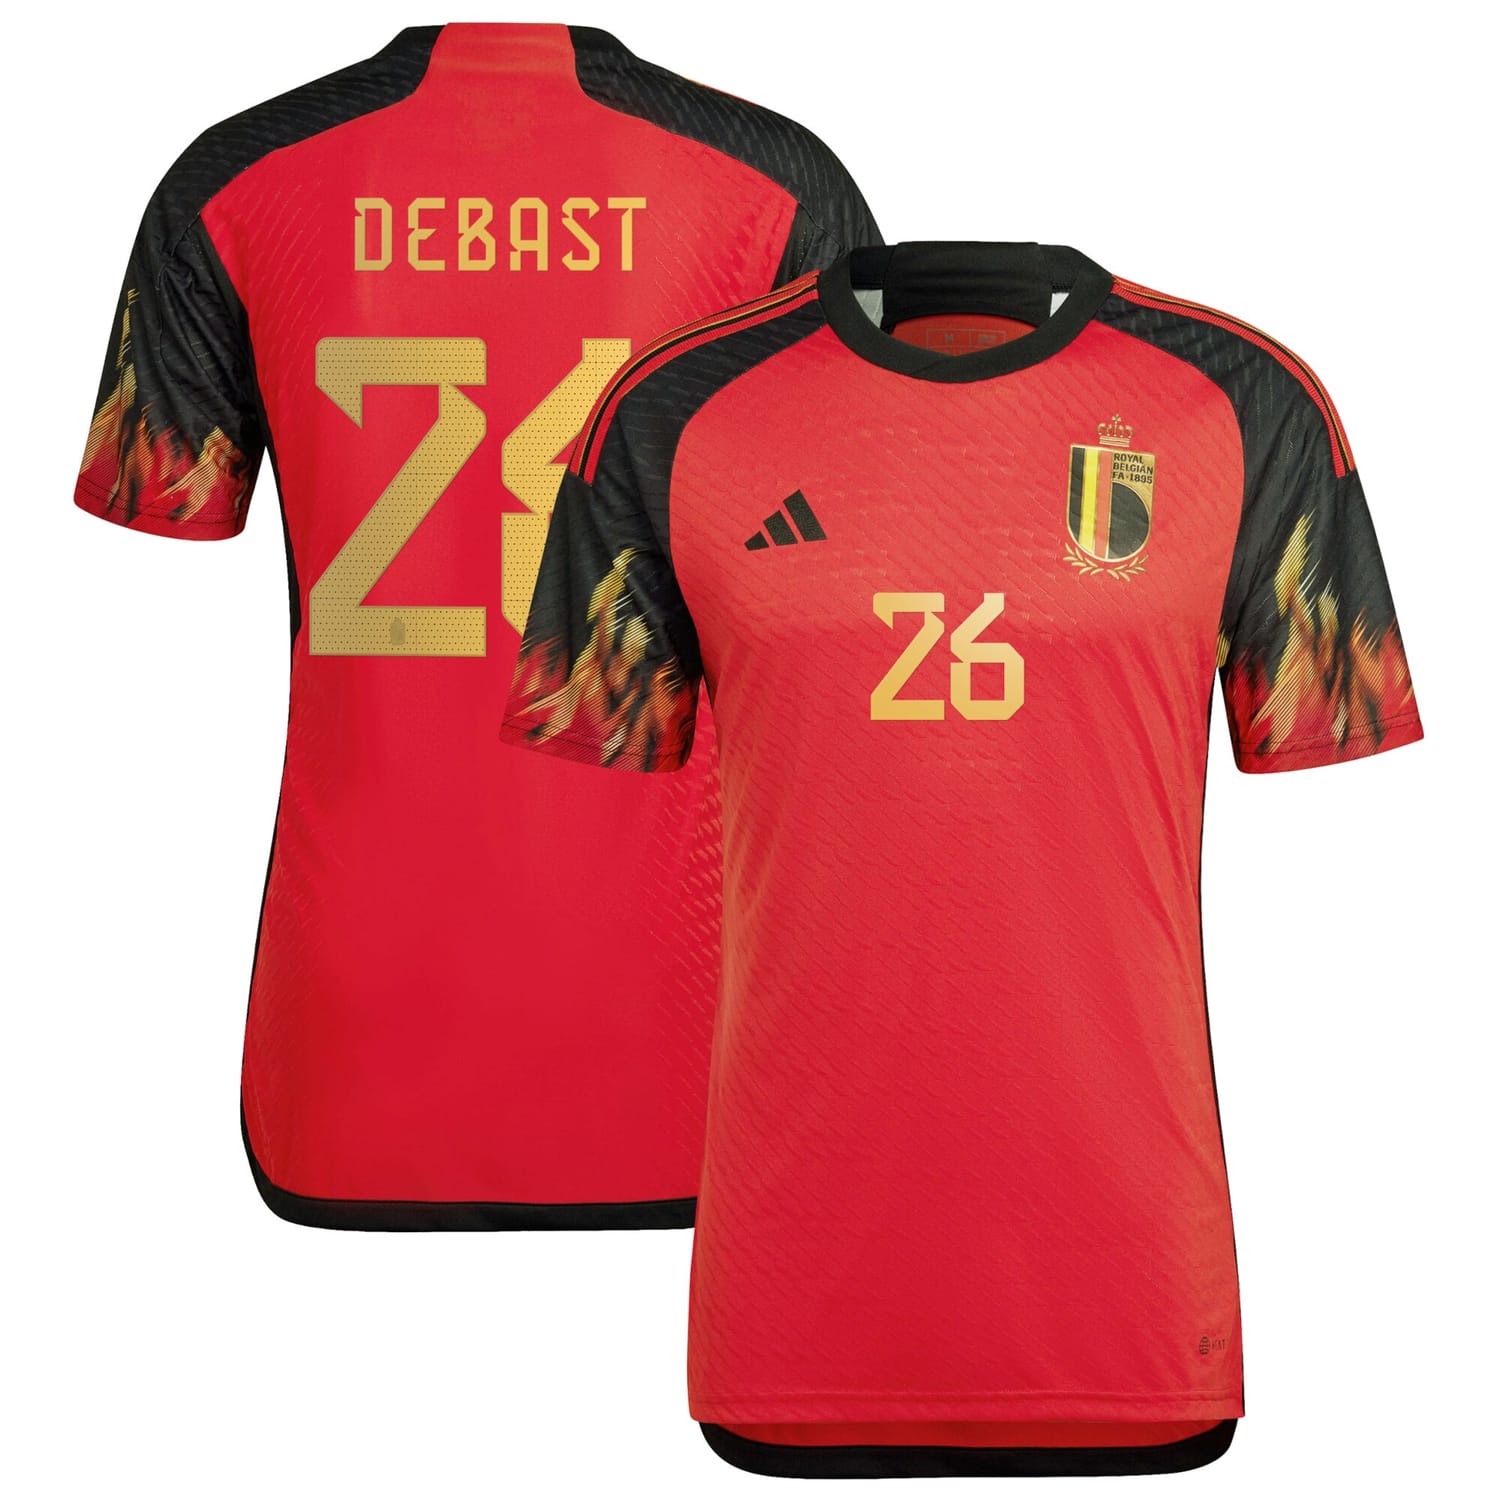 Belgium National Team Home Authentic Jersey Shirt 2022 player Zeno Debast 26 printing for Men